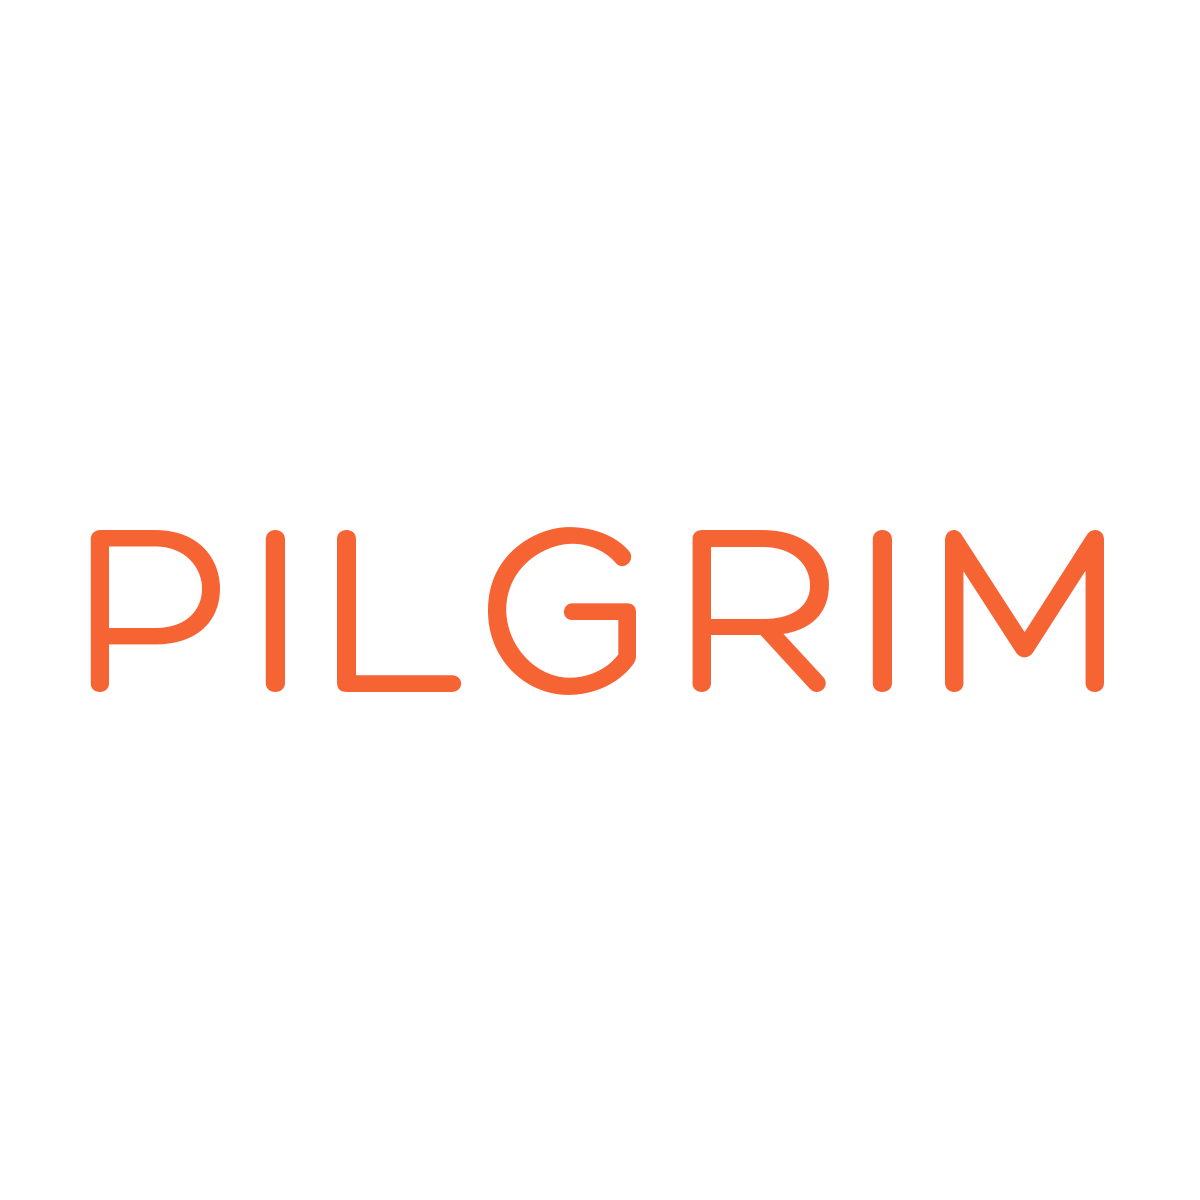 Pilgrim Oy